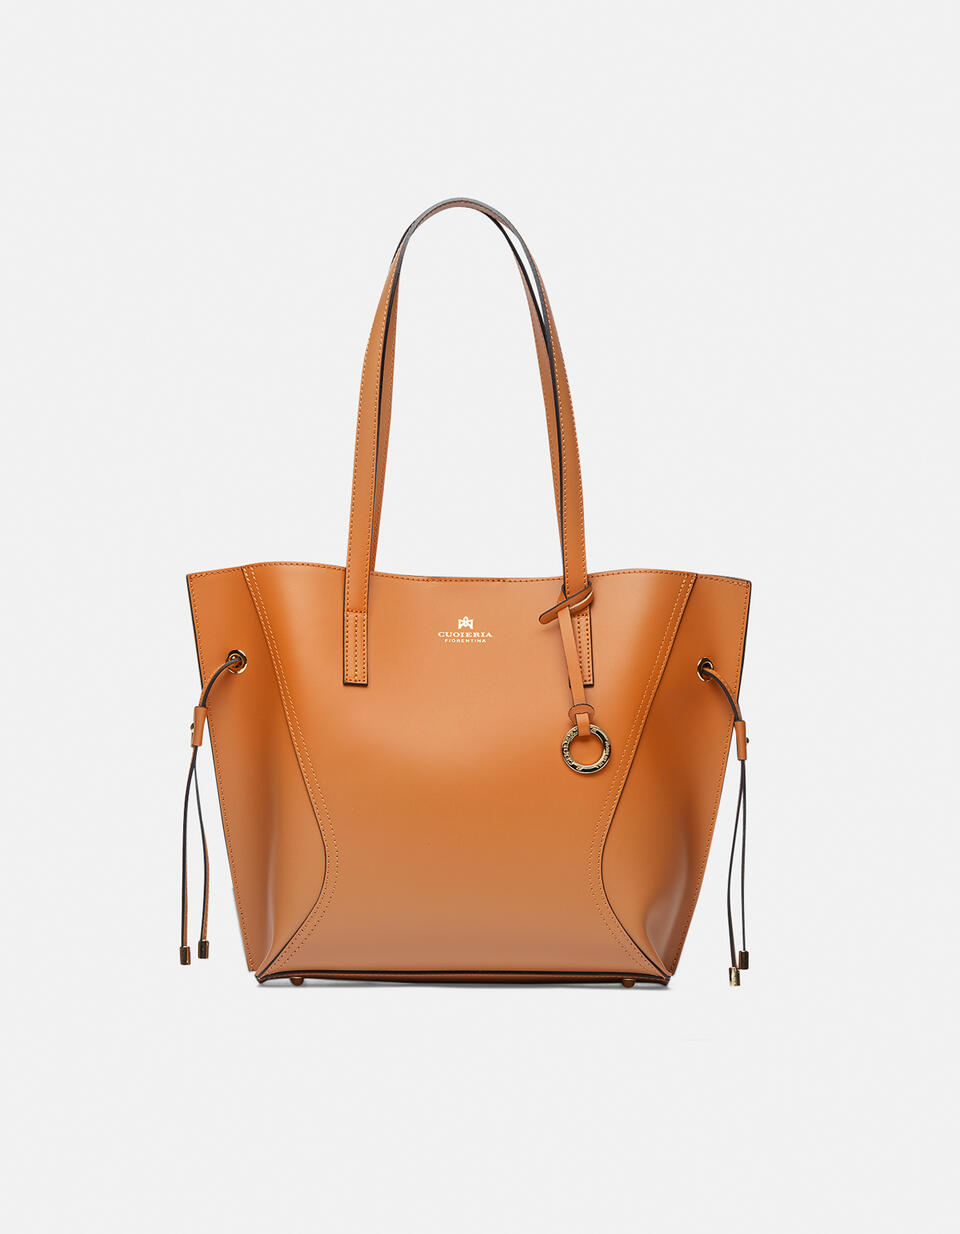 shopping bag in calf leather - SHOPPING - WOMEN'S BAGS | bags CAMEL - SHOPPING - WOMEN'S BAGS | bagsCuoieria Fiorentina